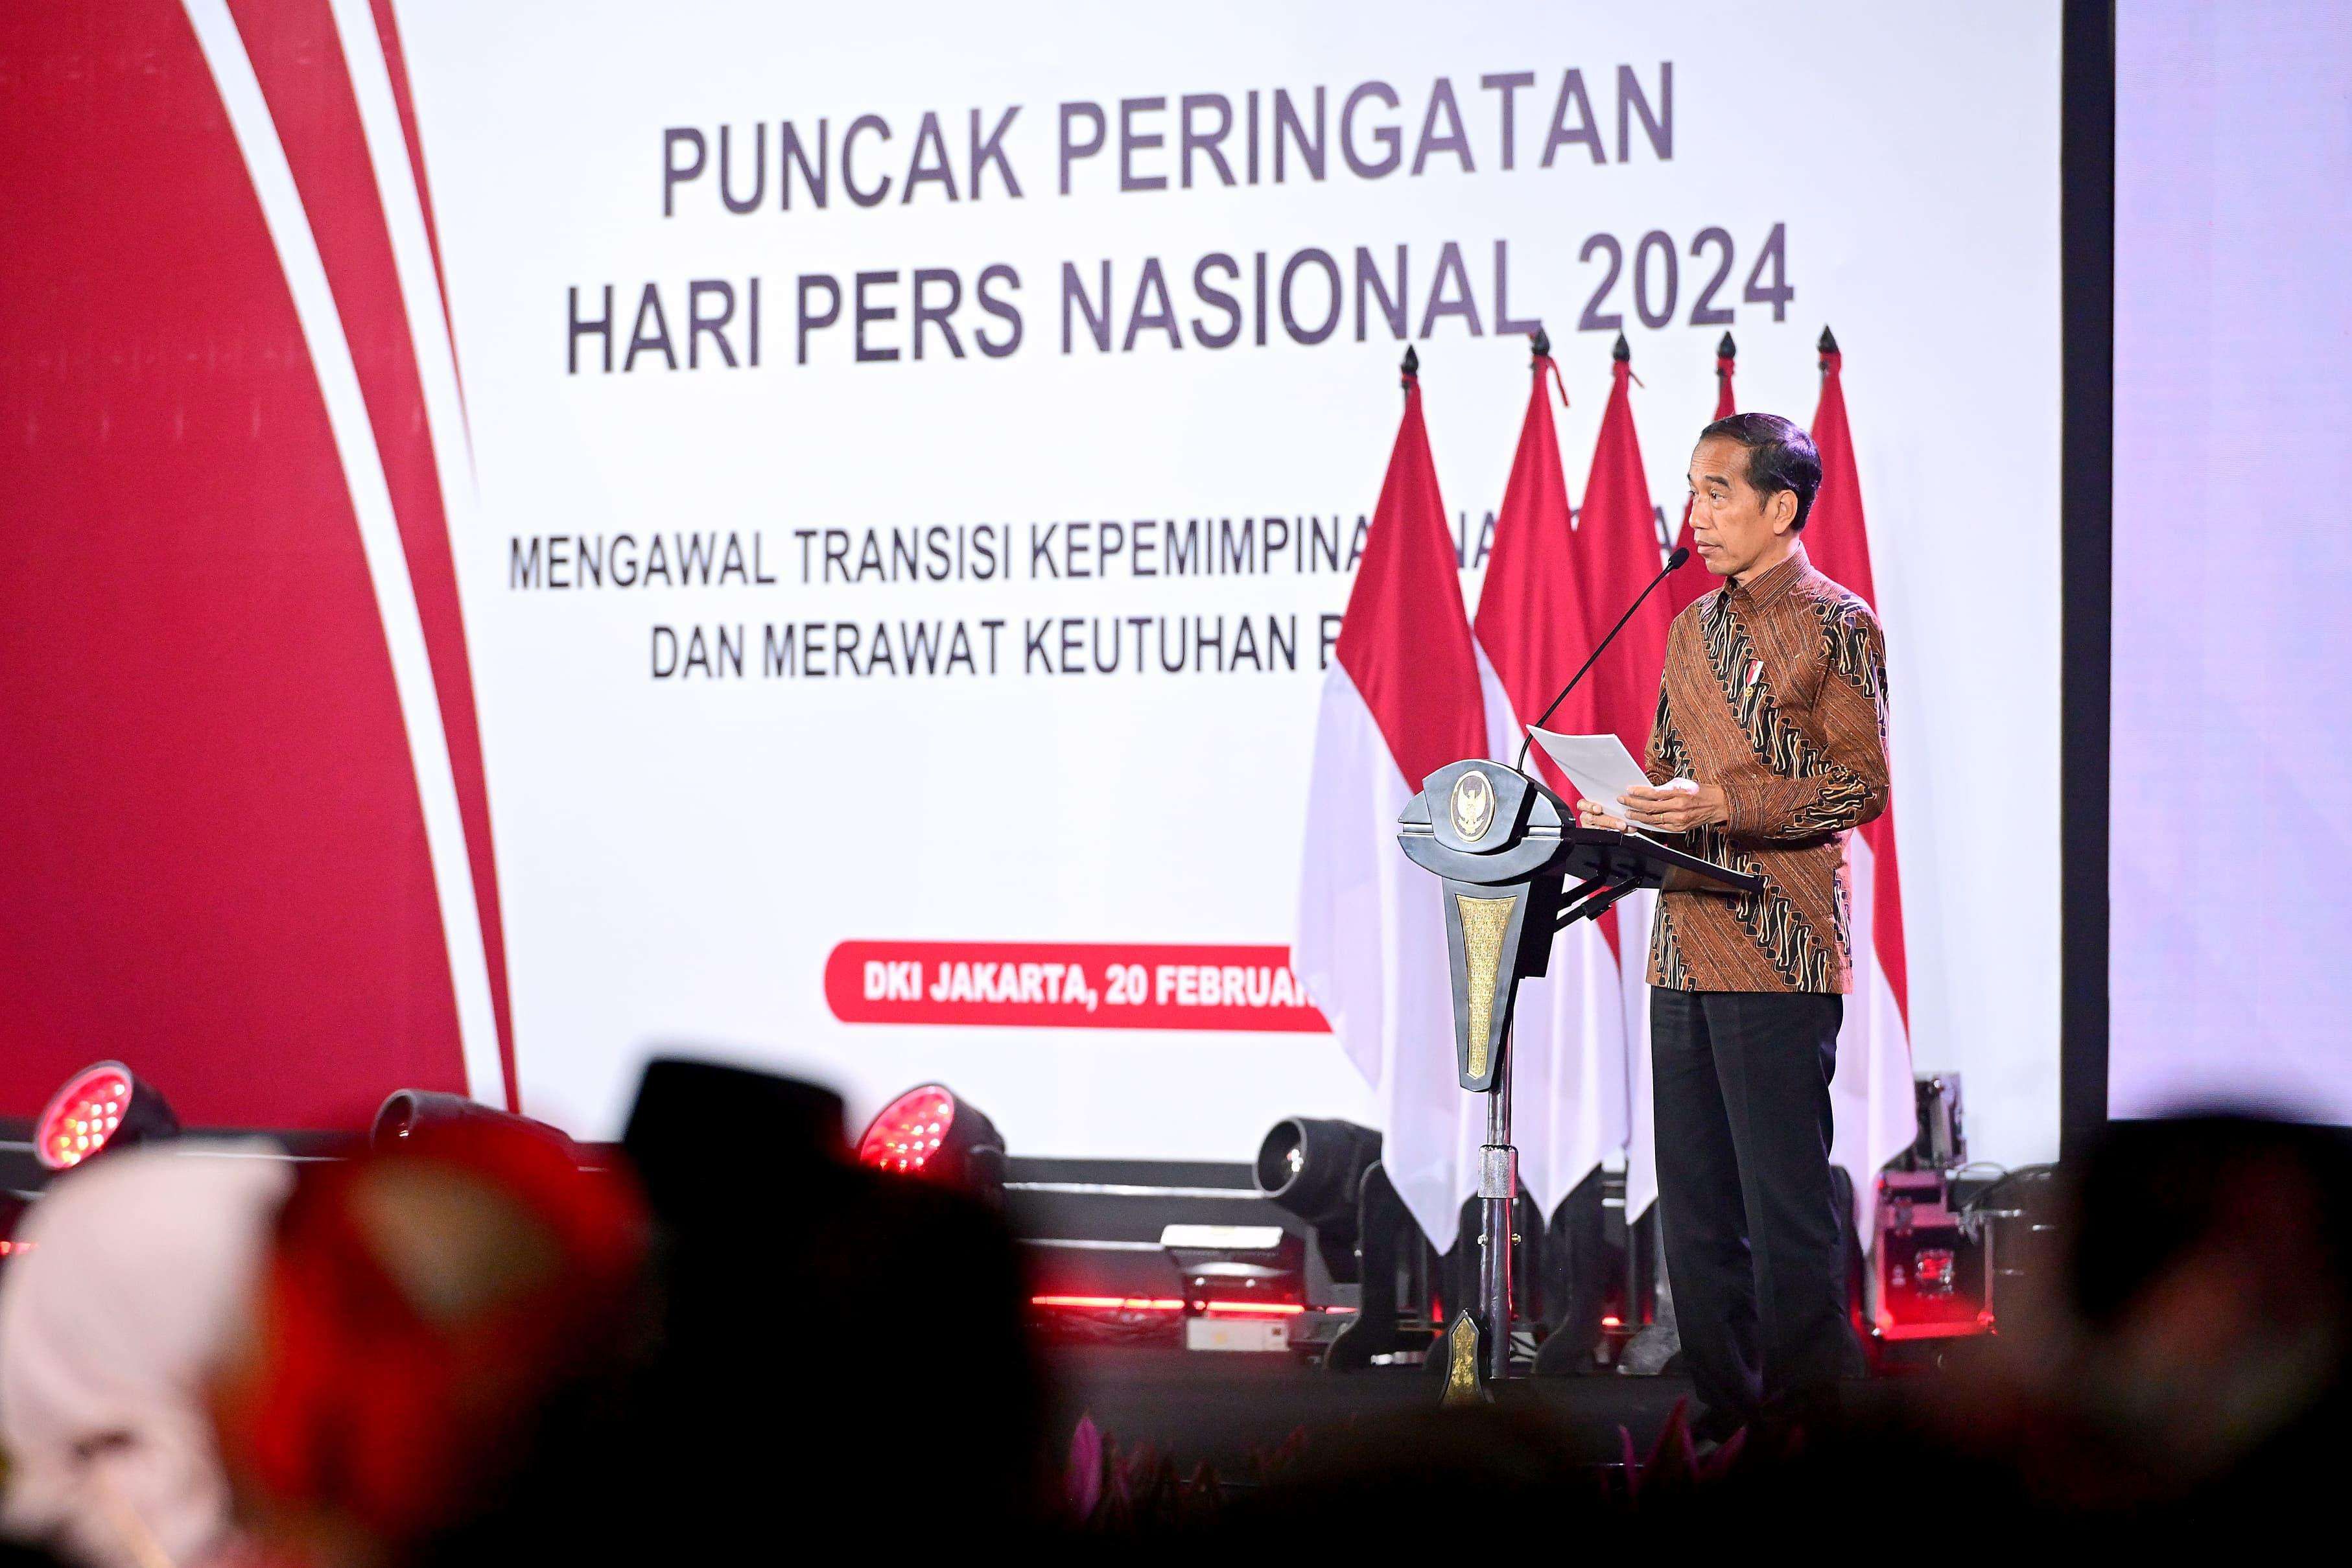 Presiden RI, Joko Widodo memberikan sambutan pada Puncak Peringatan Hari Pers Nasional Tahun 2024 di Jakarta, Selasa (20/2/2024). (Foto: BPMI Setpres)